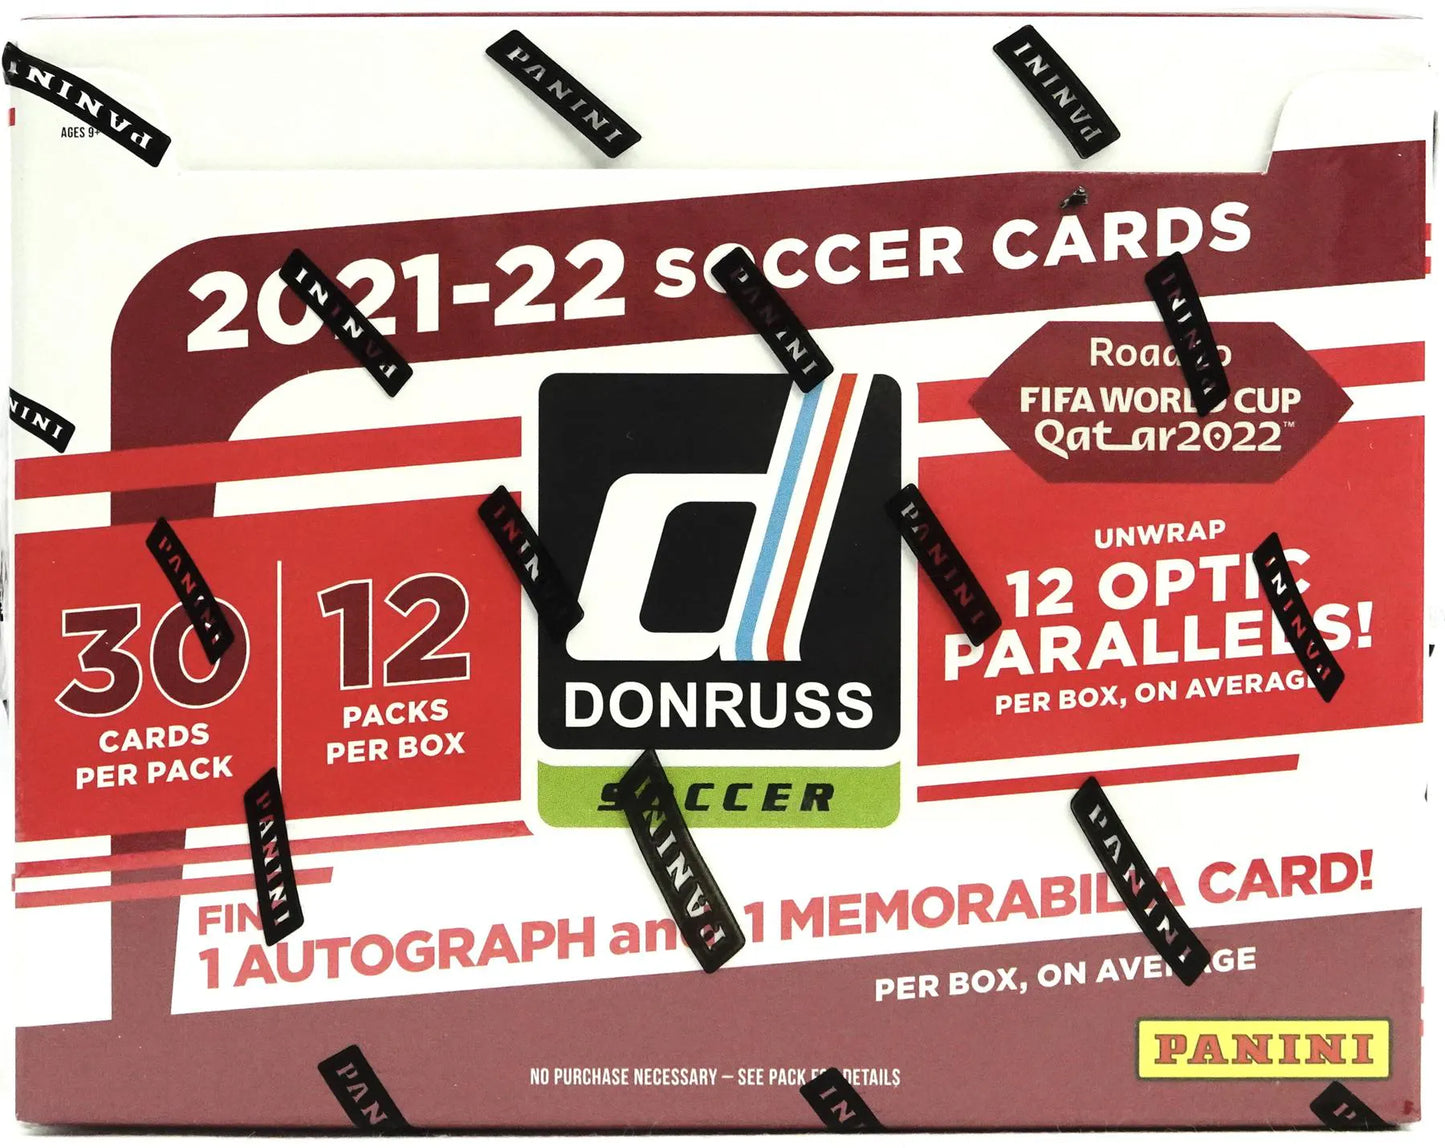 2021/22 Panini Donruss Soccer Blaster Box (Orange and Purple Lasers!)